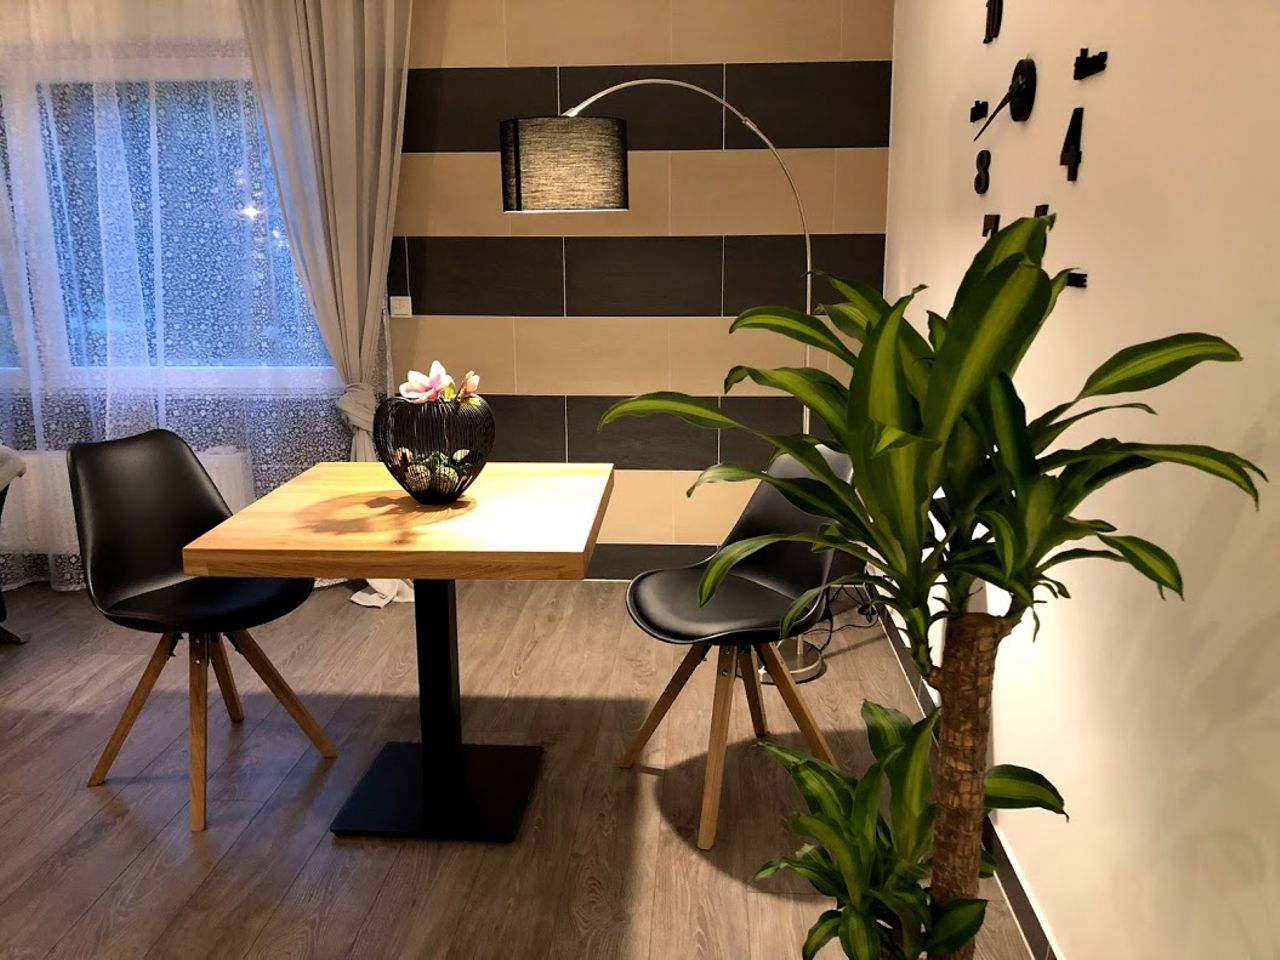 High-quality modern single apartment in Deutz near the University of Applied Sciences between Lanxessarena and Kölnarcaden